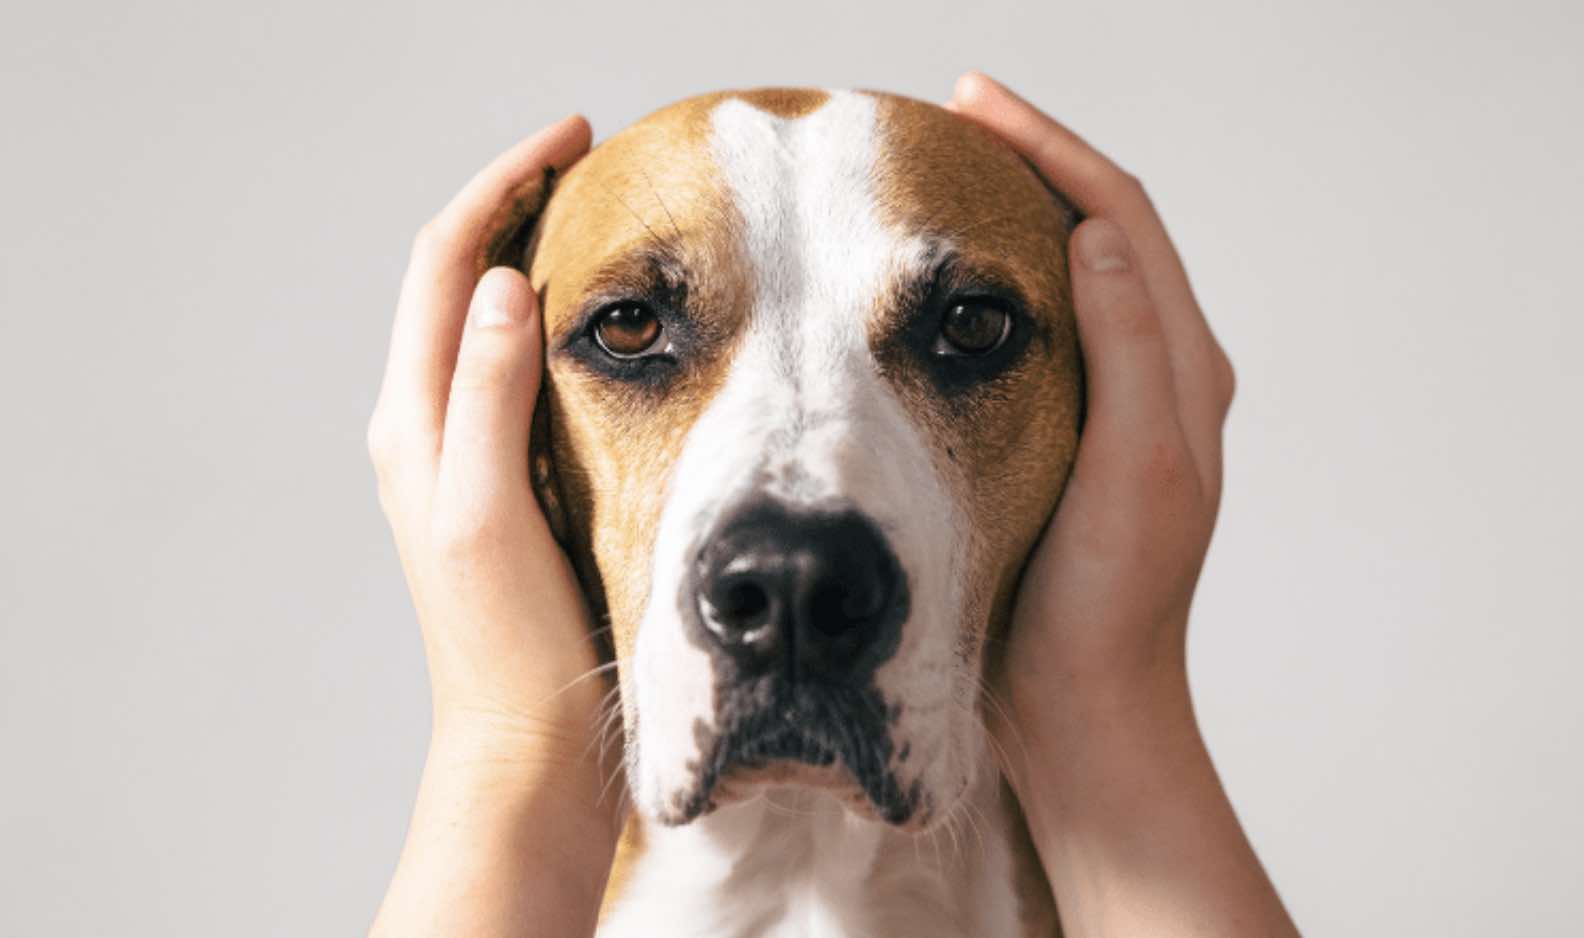 kommando procedure prosa Hudlidelser og allergi hos hund | Marienhoff Dyreklinik